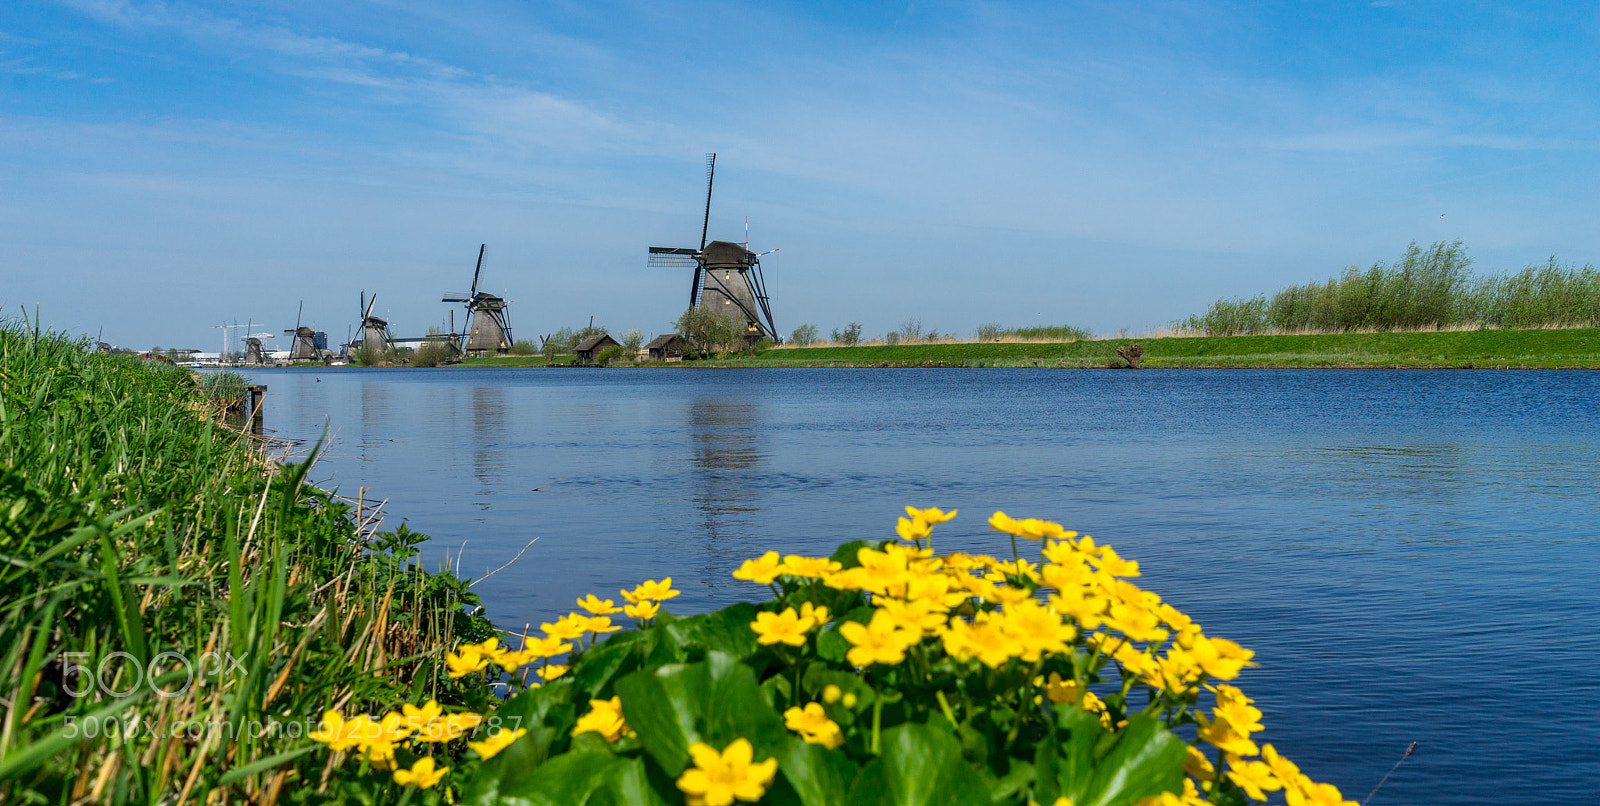 Sony a7 sample photo. Windmills in holland (kinderdejik) photography